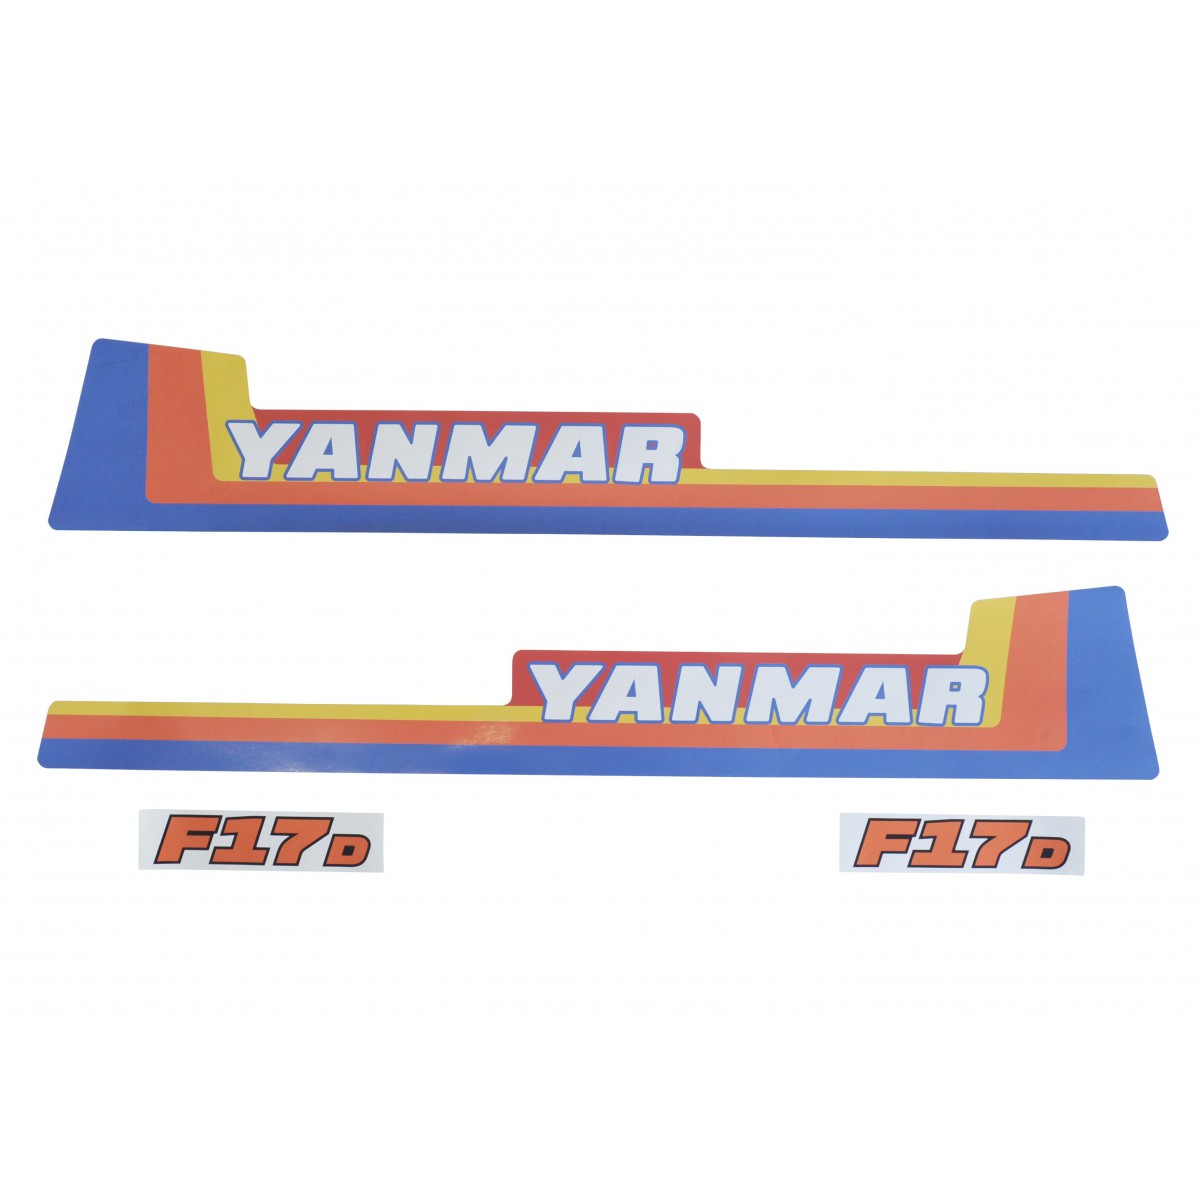 Stikers Yanmar F17D decals